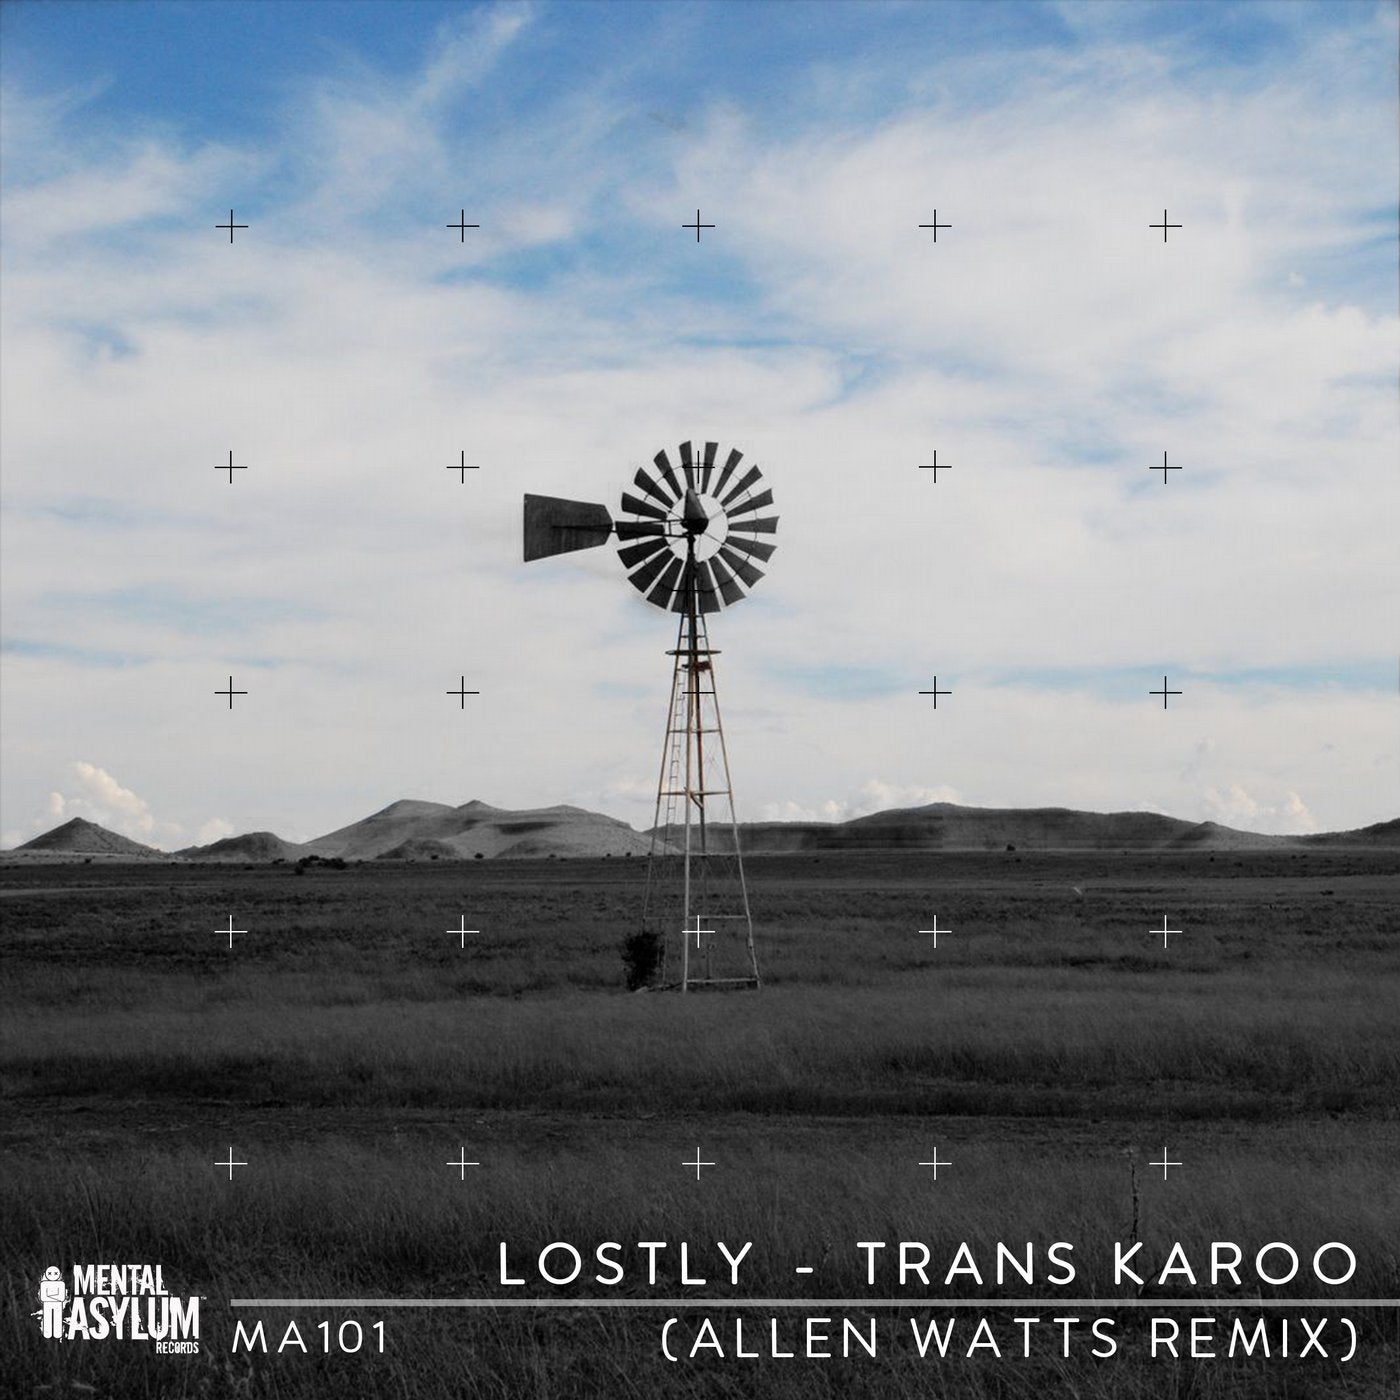 Trans Karoo - Allen Watts Remix